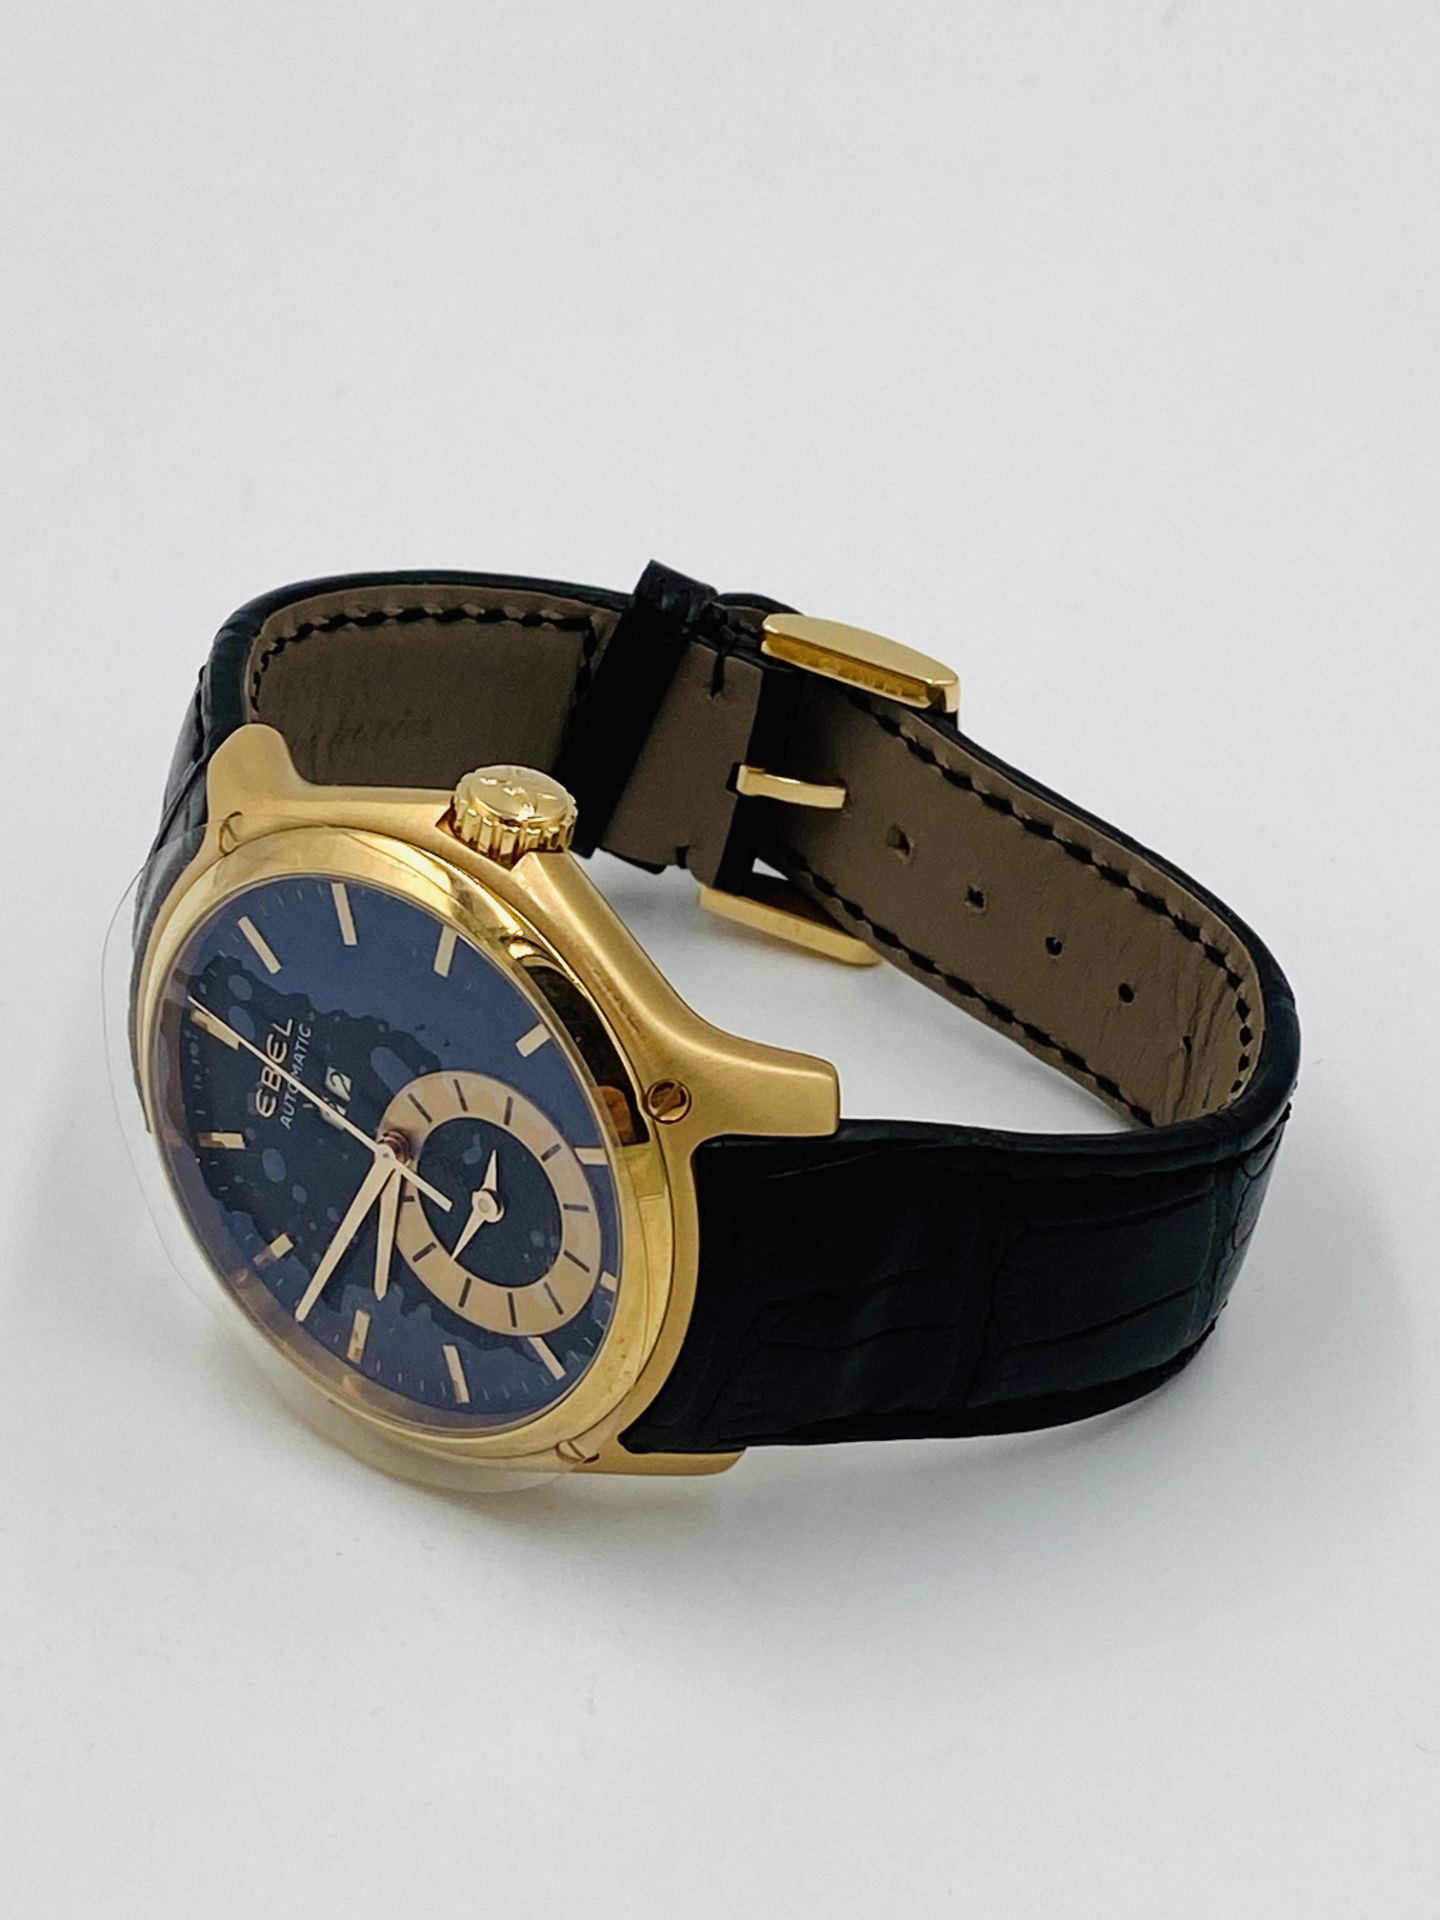 18ct gold Ebel wrist watch - Image 4 of 5